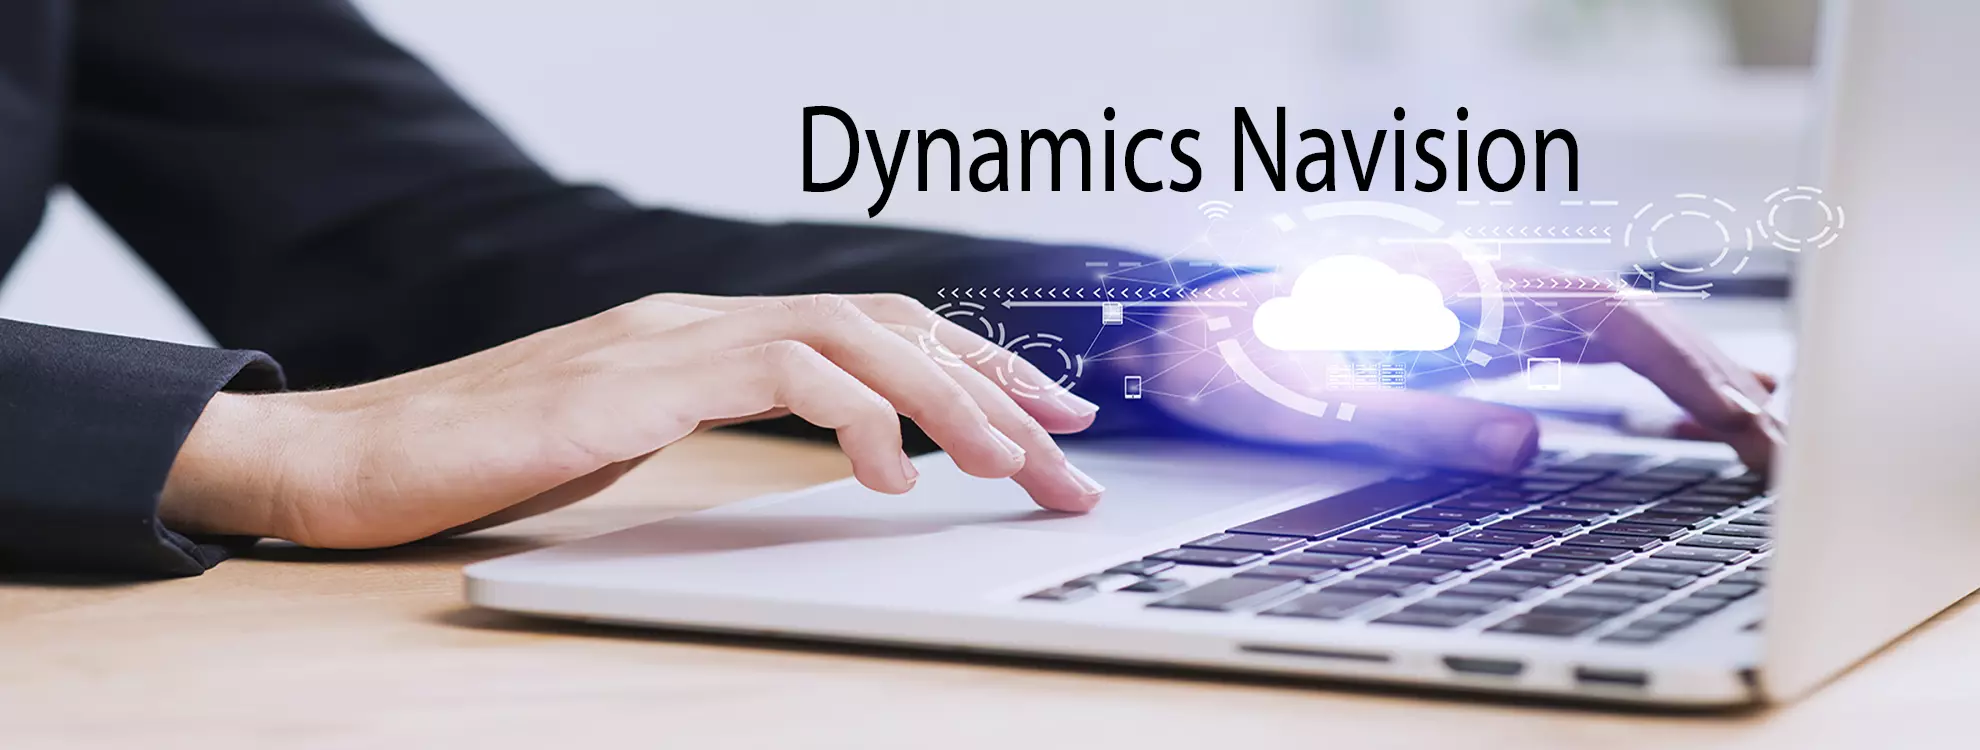 Microsoft Dynamics Navision